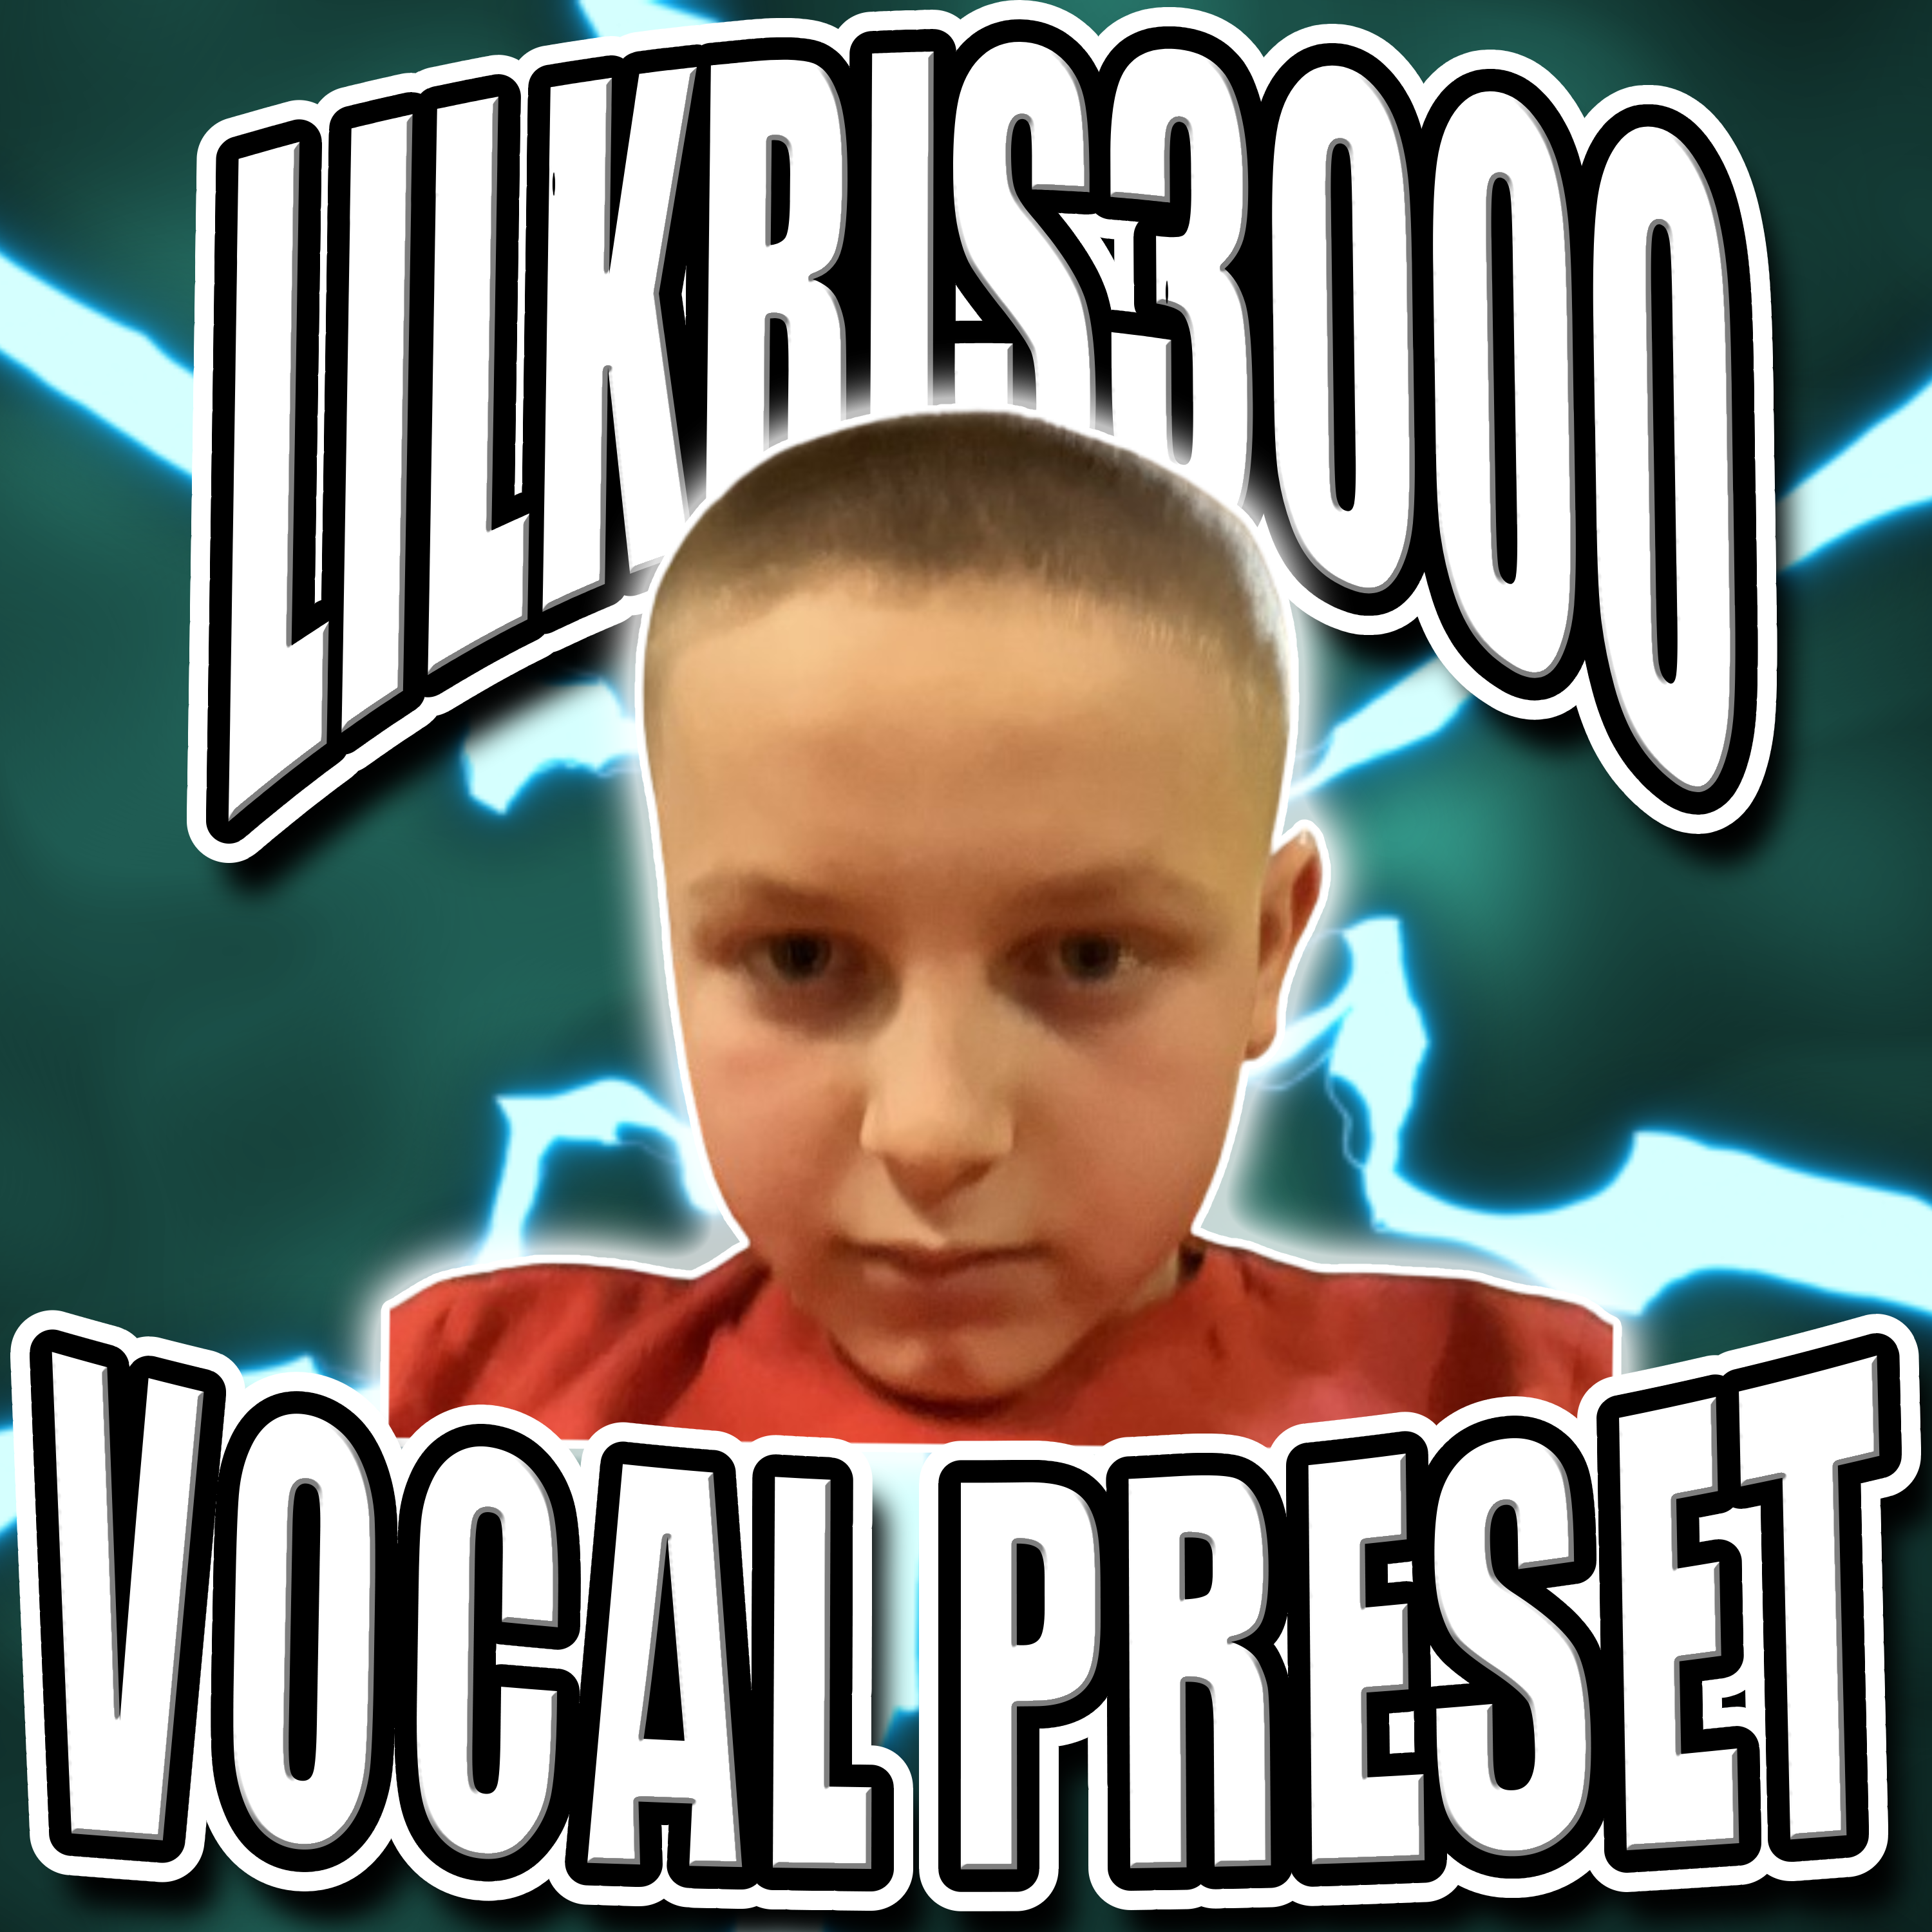 LilKris3000 Vocal Preset